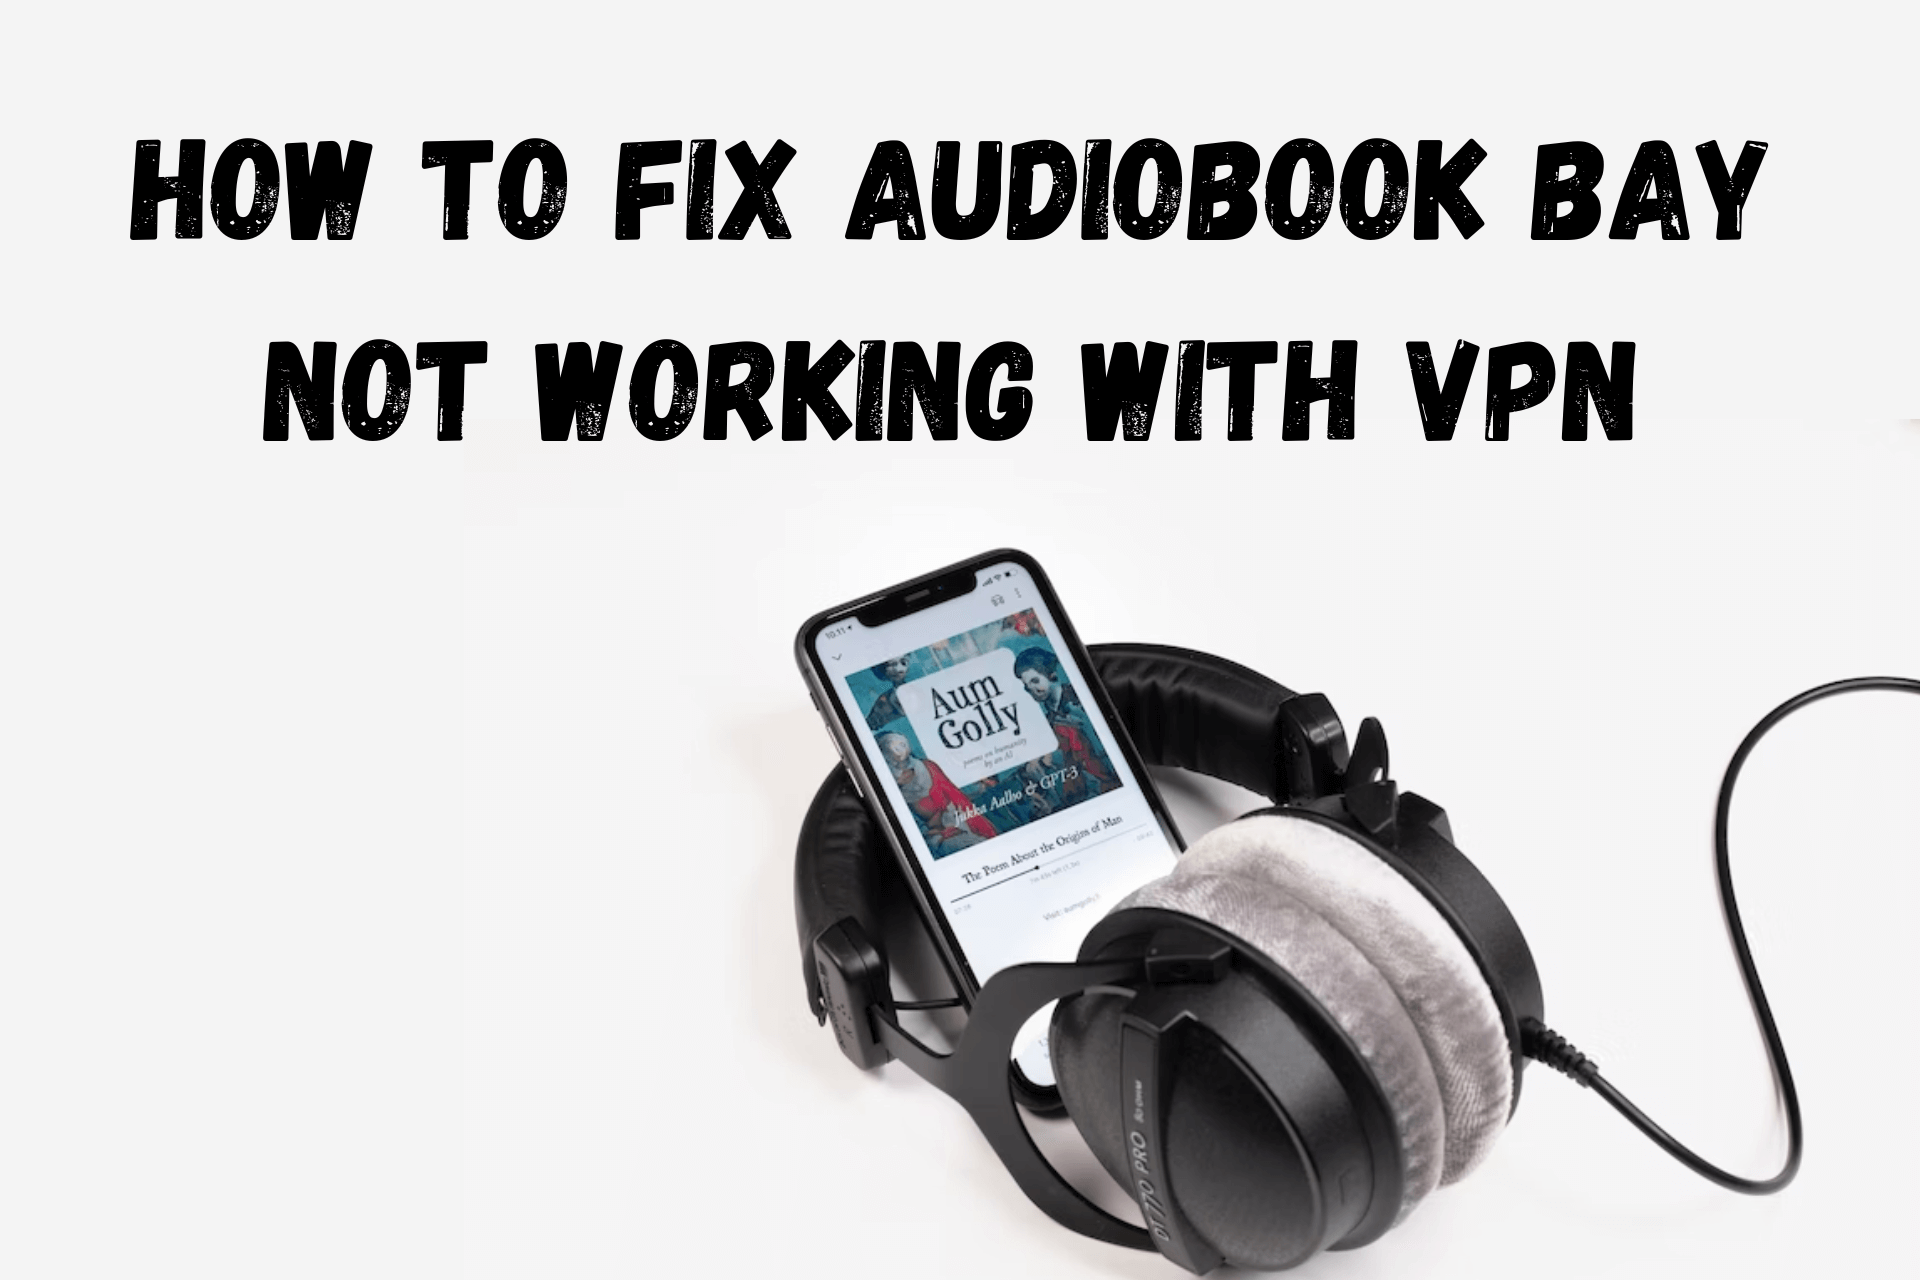 AudioBook Bay not working with VPN